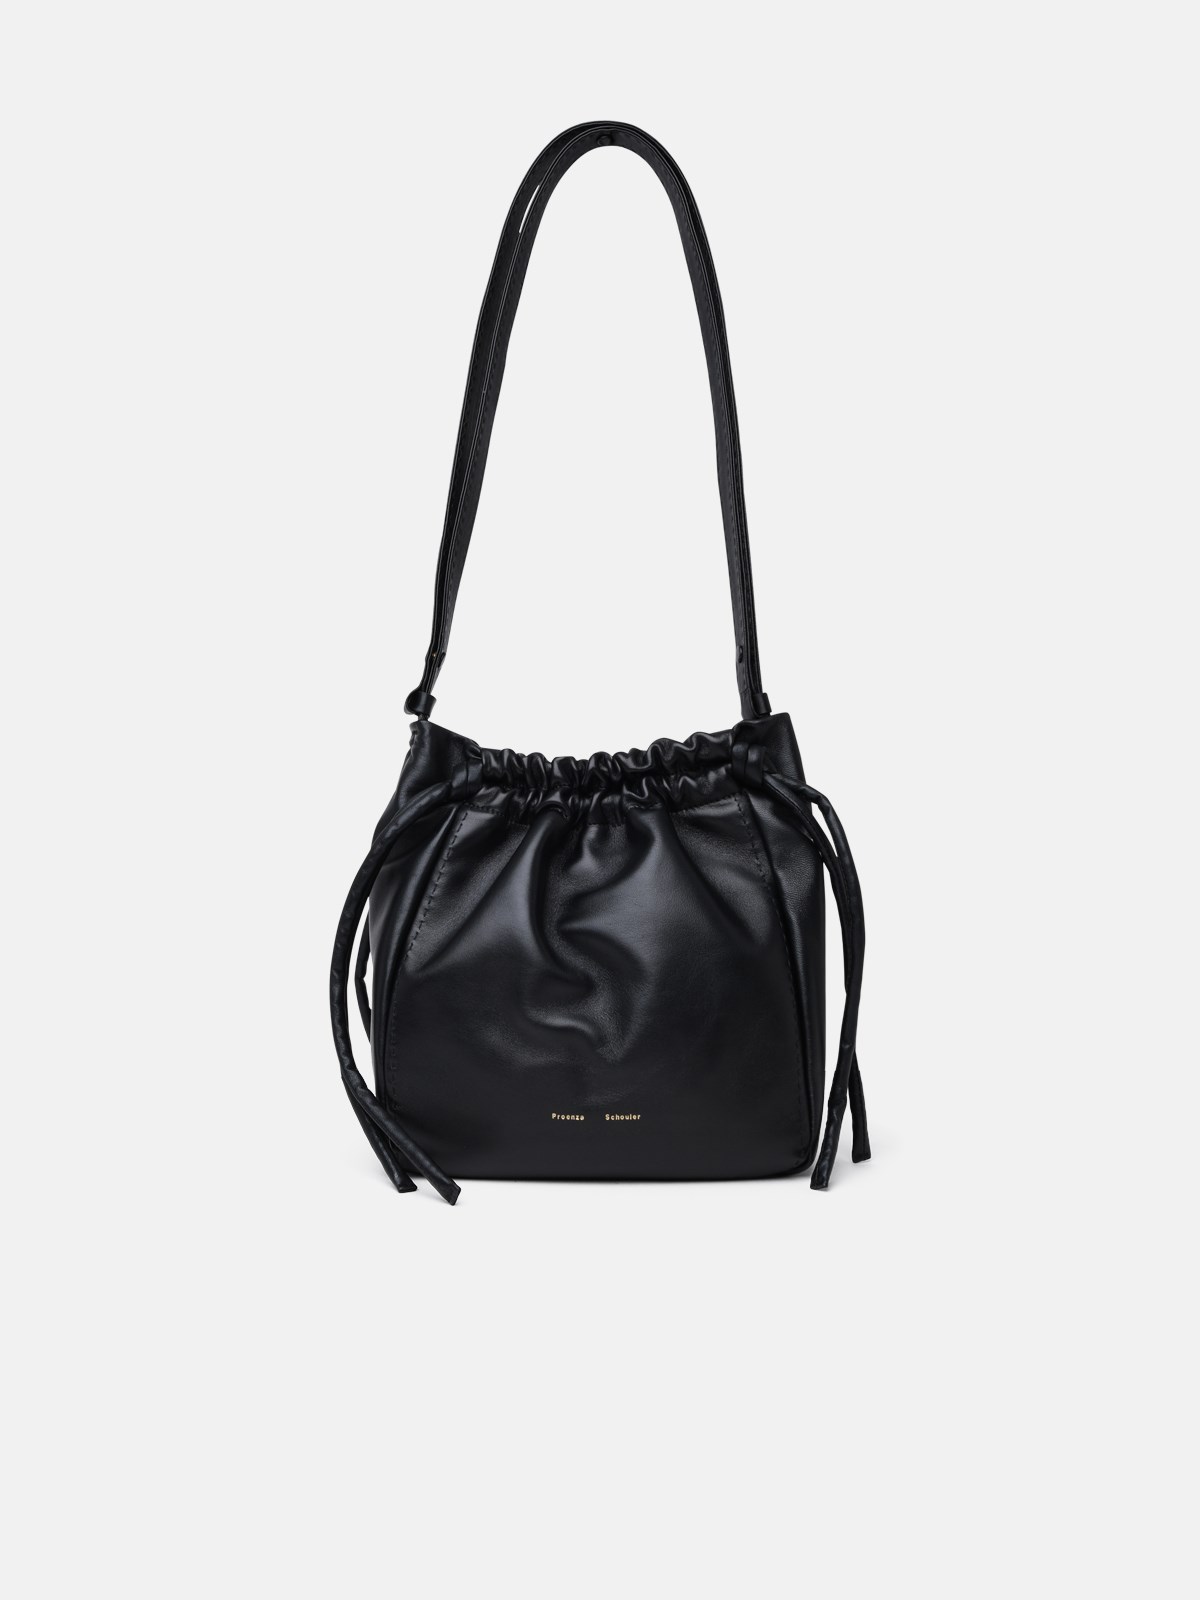 Proenza Schouler Black Leather Drawstring Bag